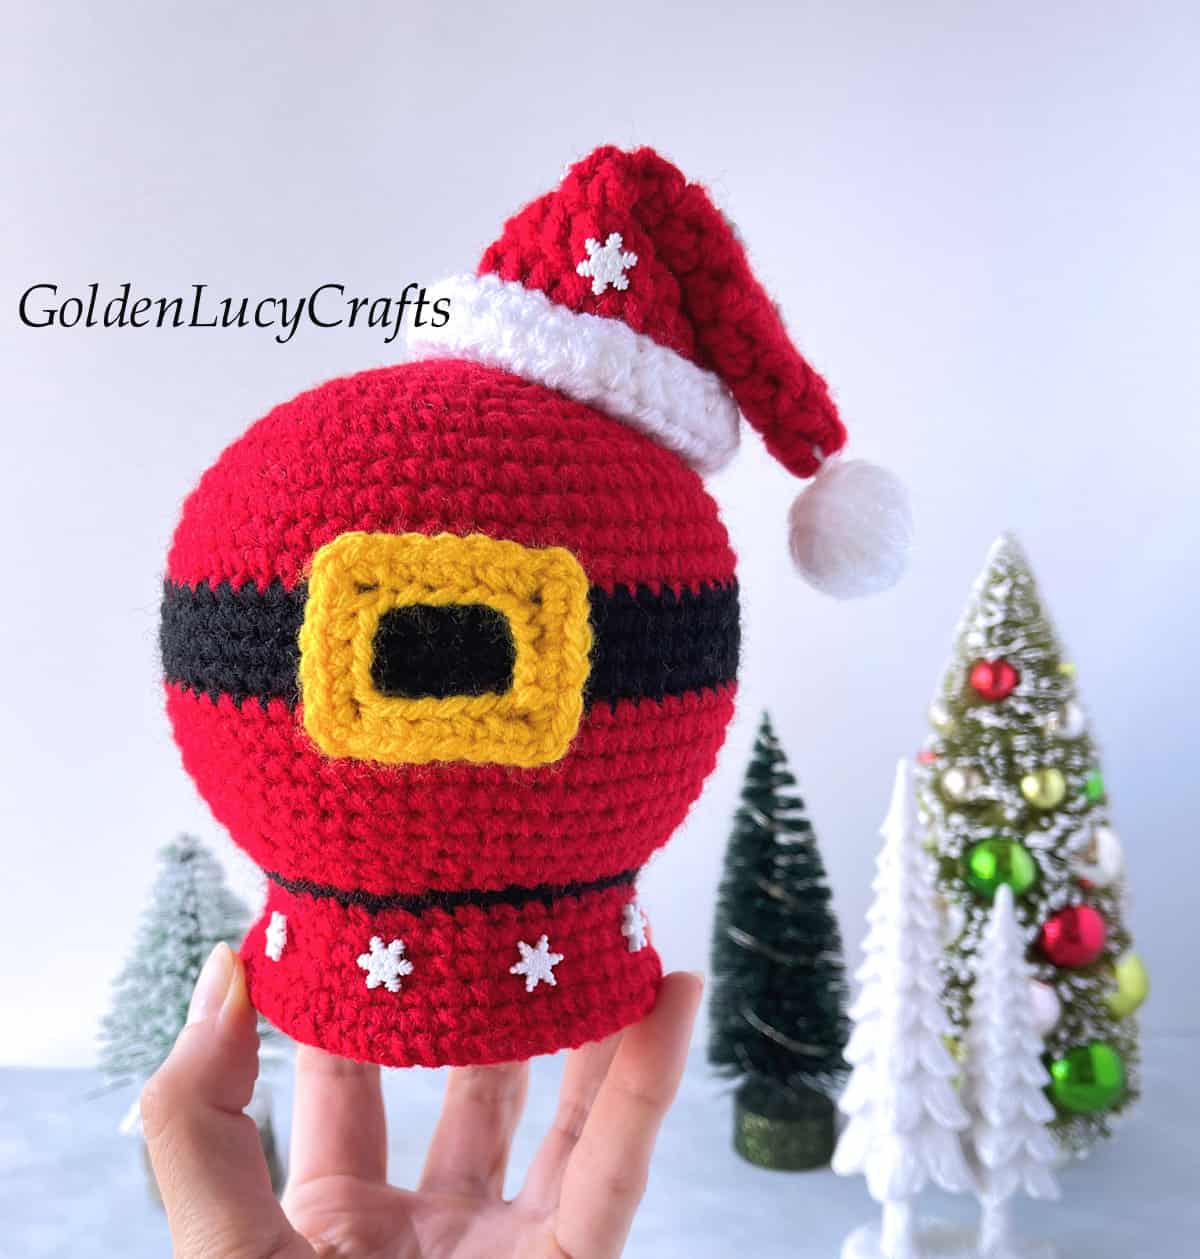 Crochet Santa belly snow globe held by finger tips.